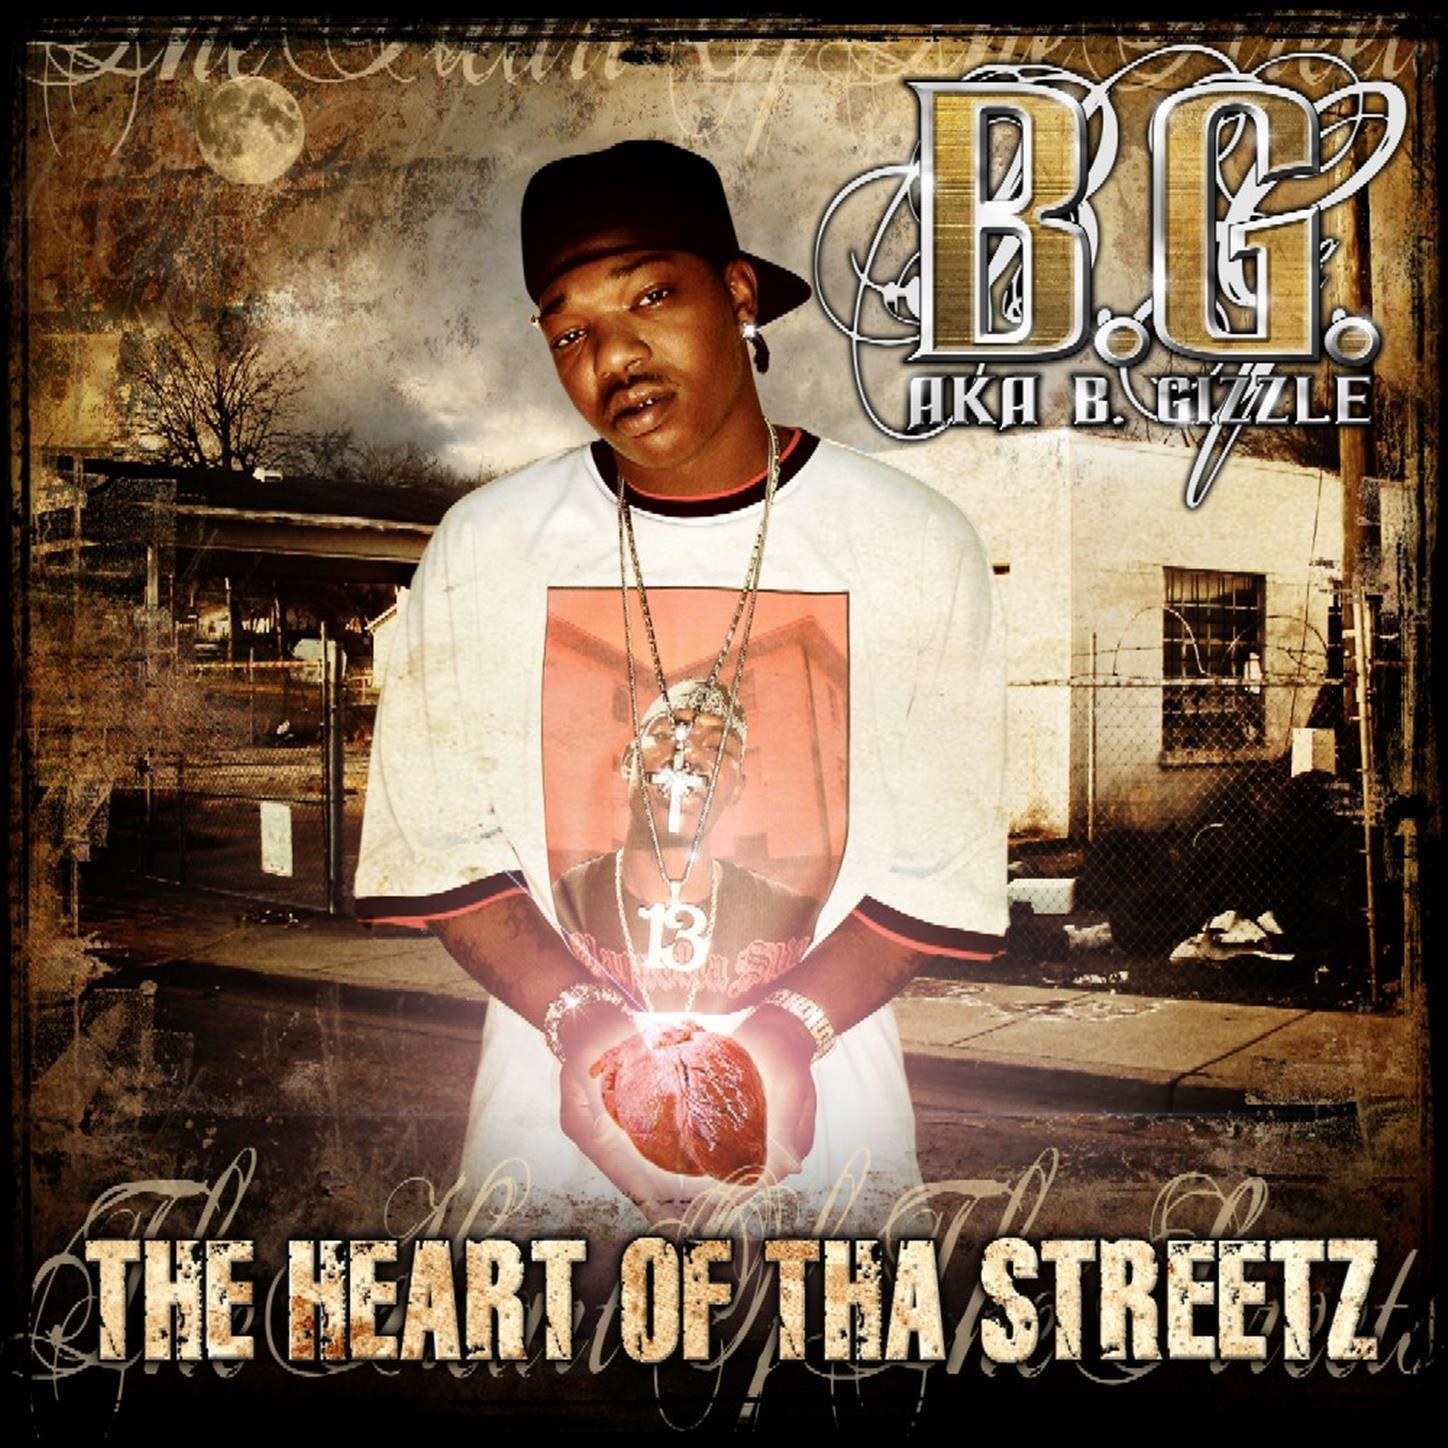 The Heart Of Tha Street